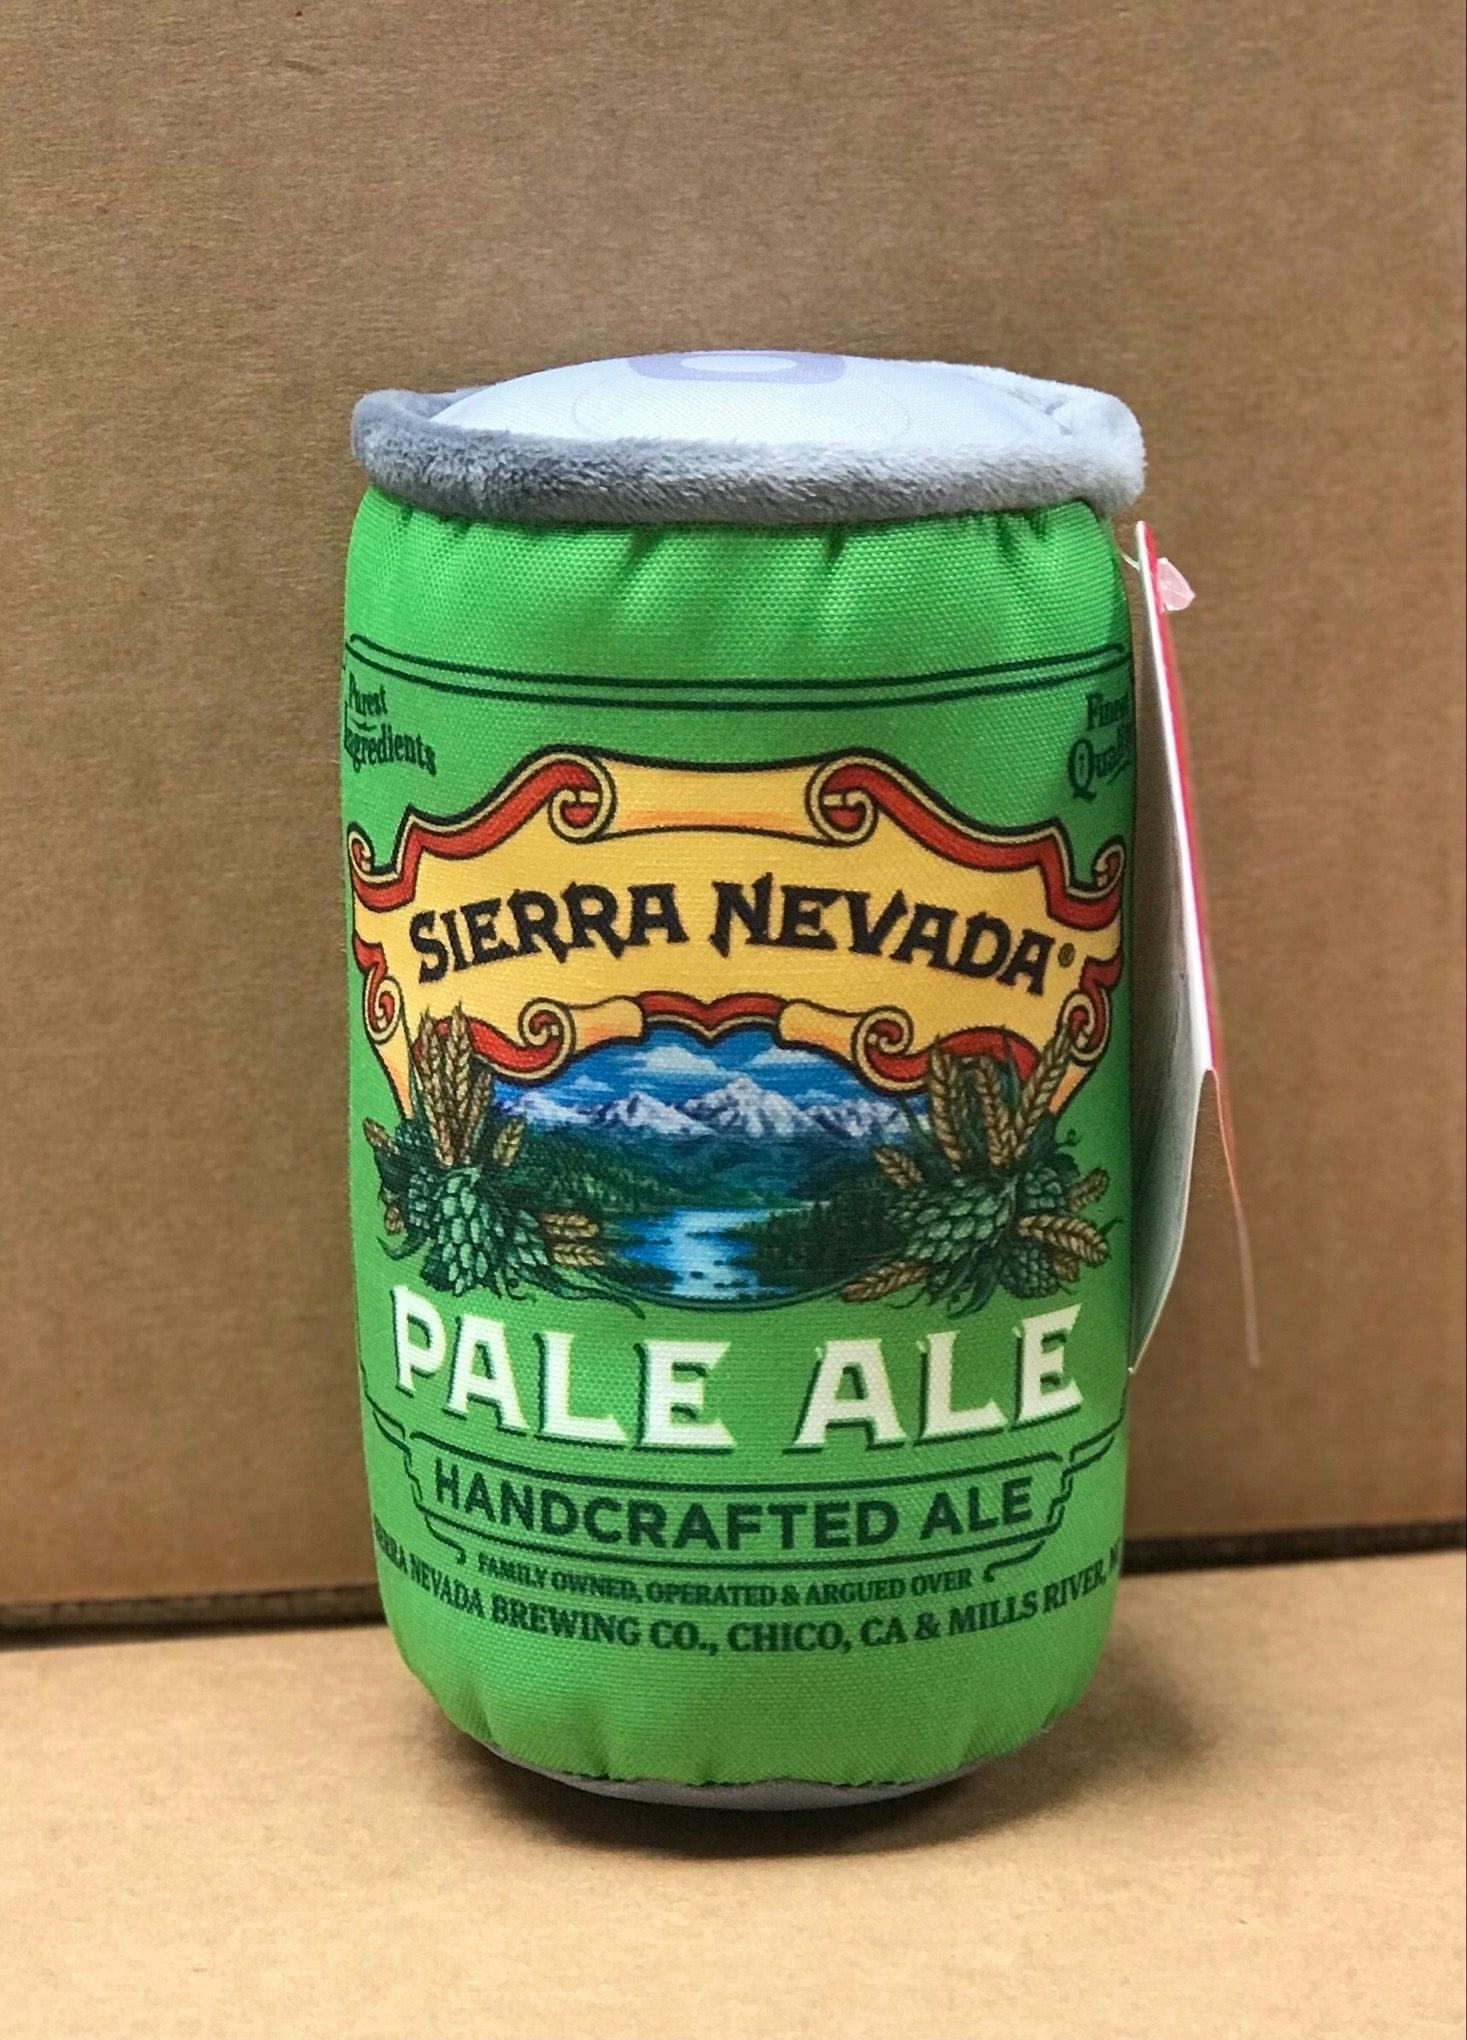 Sierra Nevada Pale Ale can plush dog toy